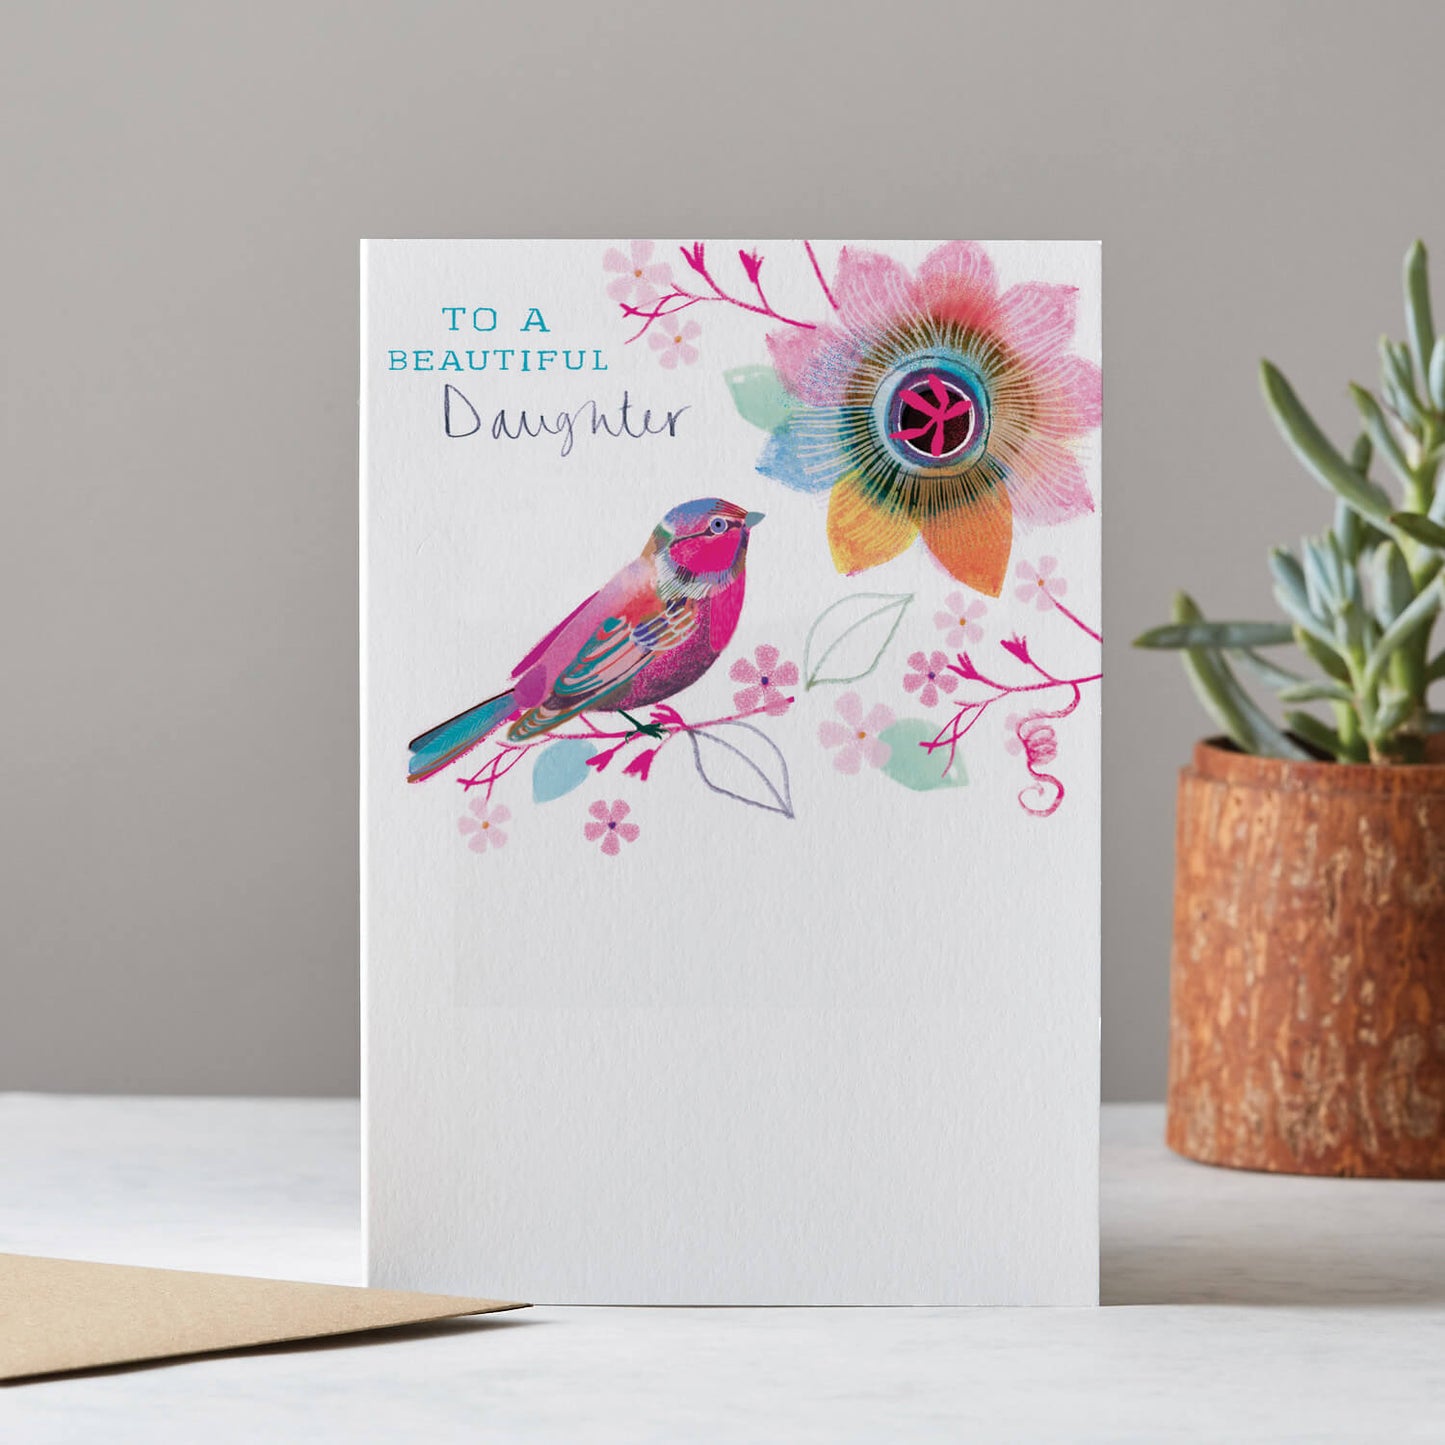 BEAUTIFUL DAUGHTER CARD – idrewthis.co.uk